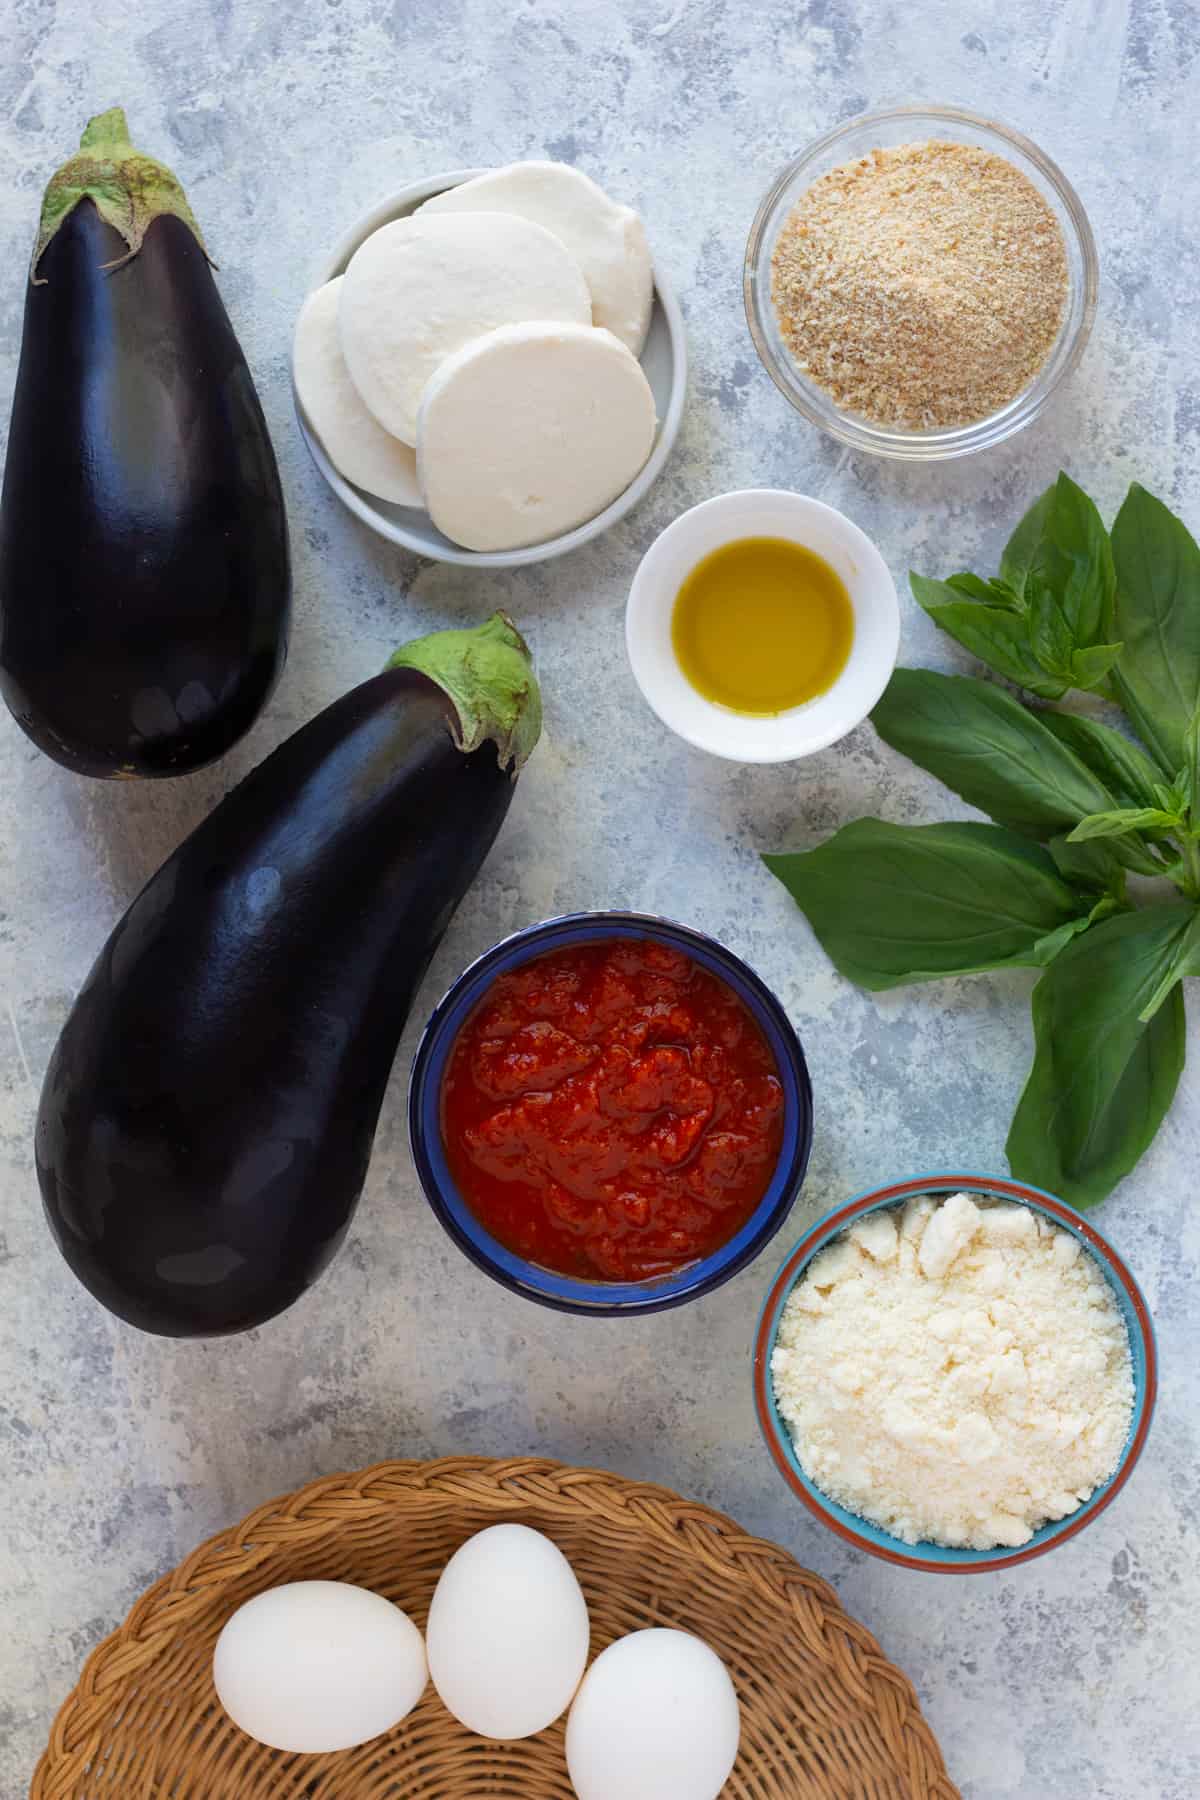 To make eggplant parmesan recipe, you need eggplant, breadcrumbs, eggs, olive oil, parmesan, mozzarella and marinara sauce. 